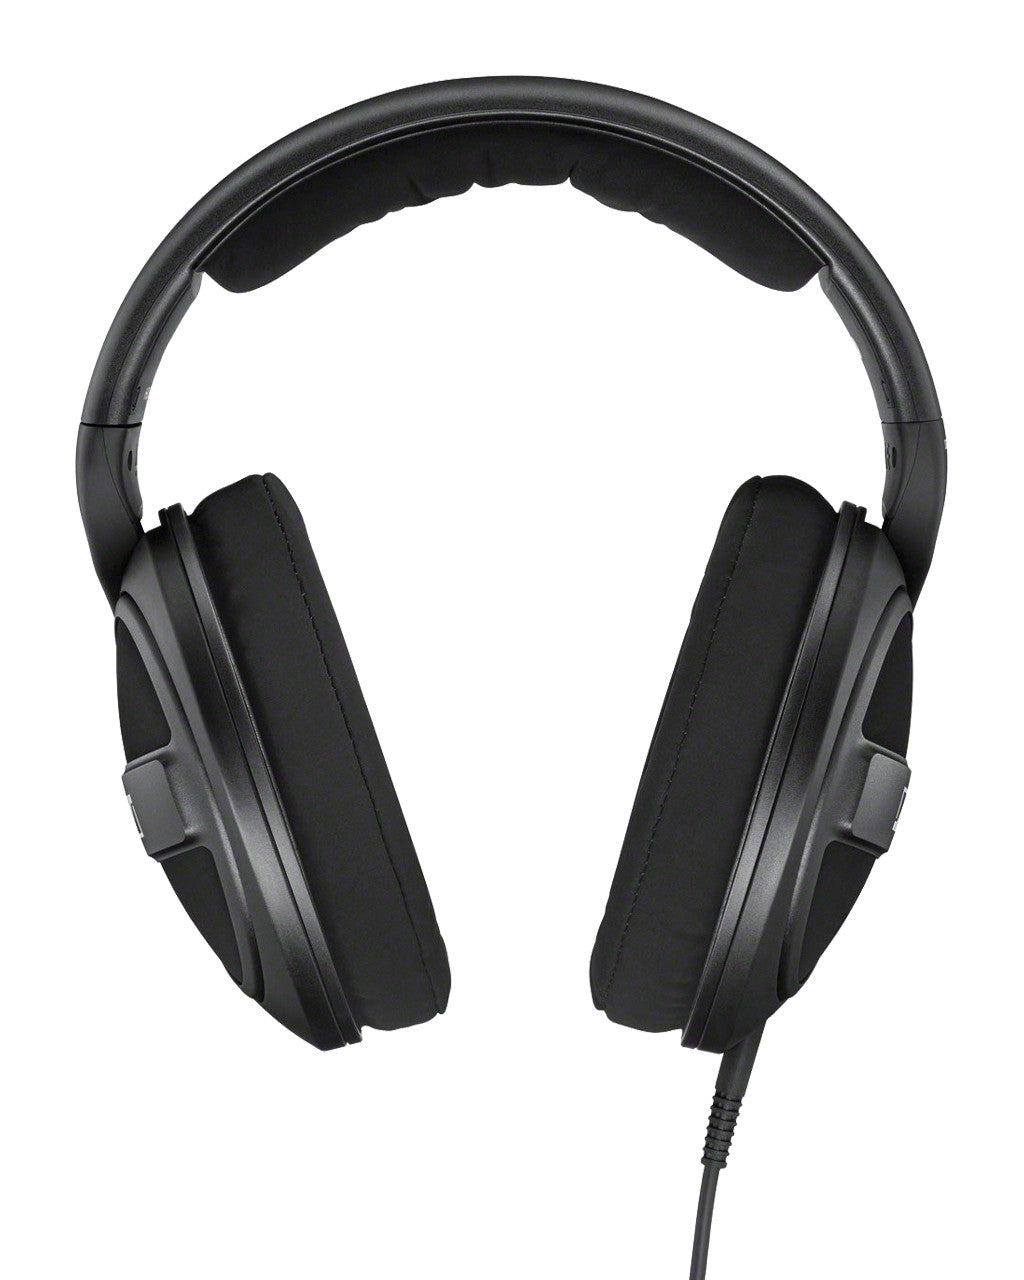 Sennheiser HD 569 Over-Ear Headphones